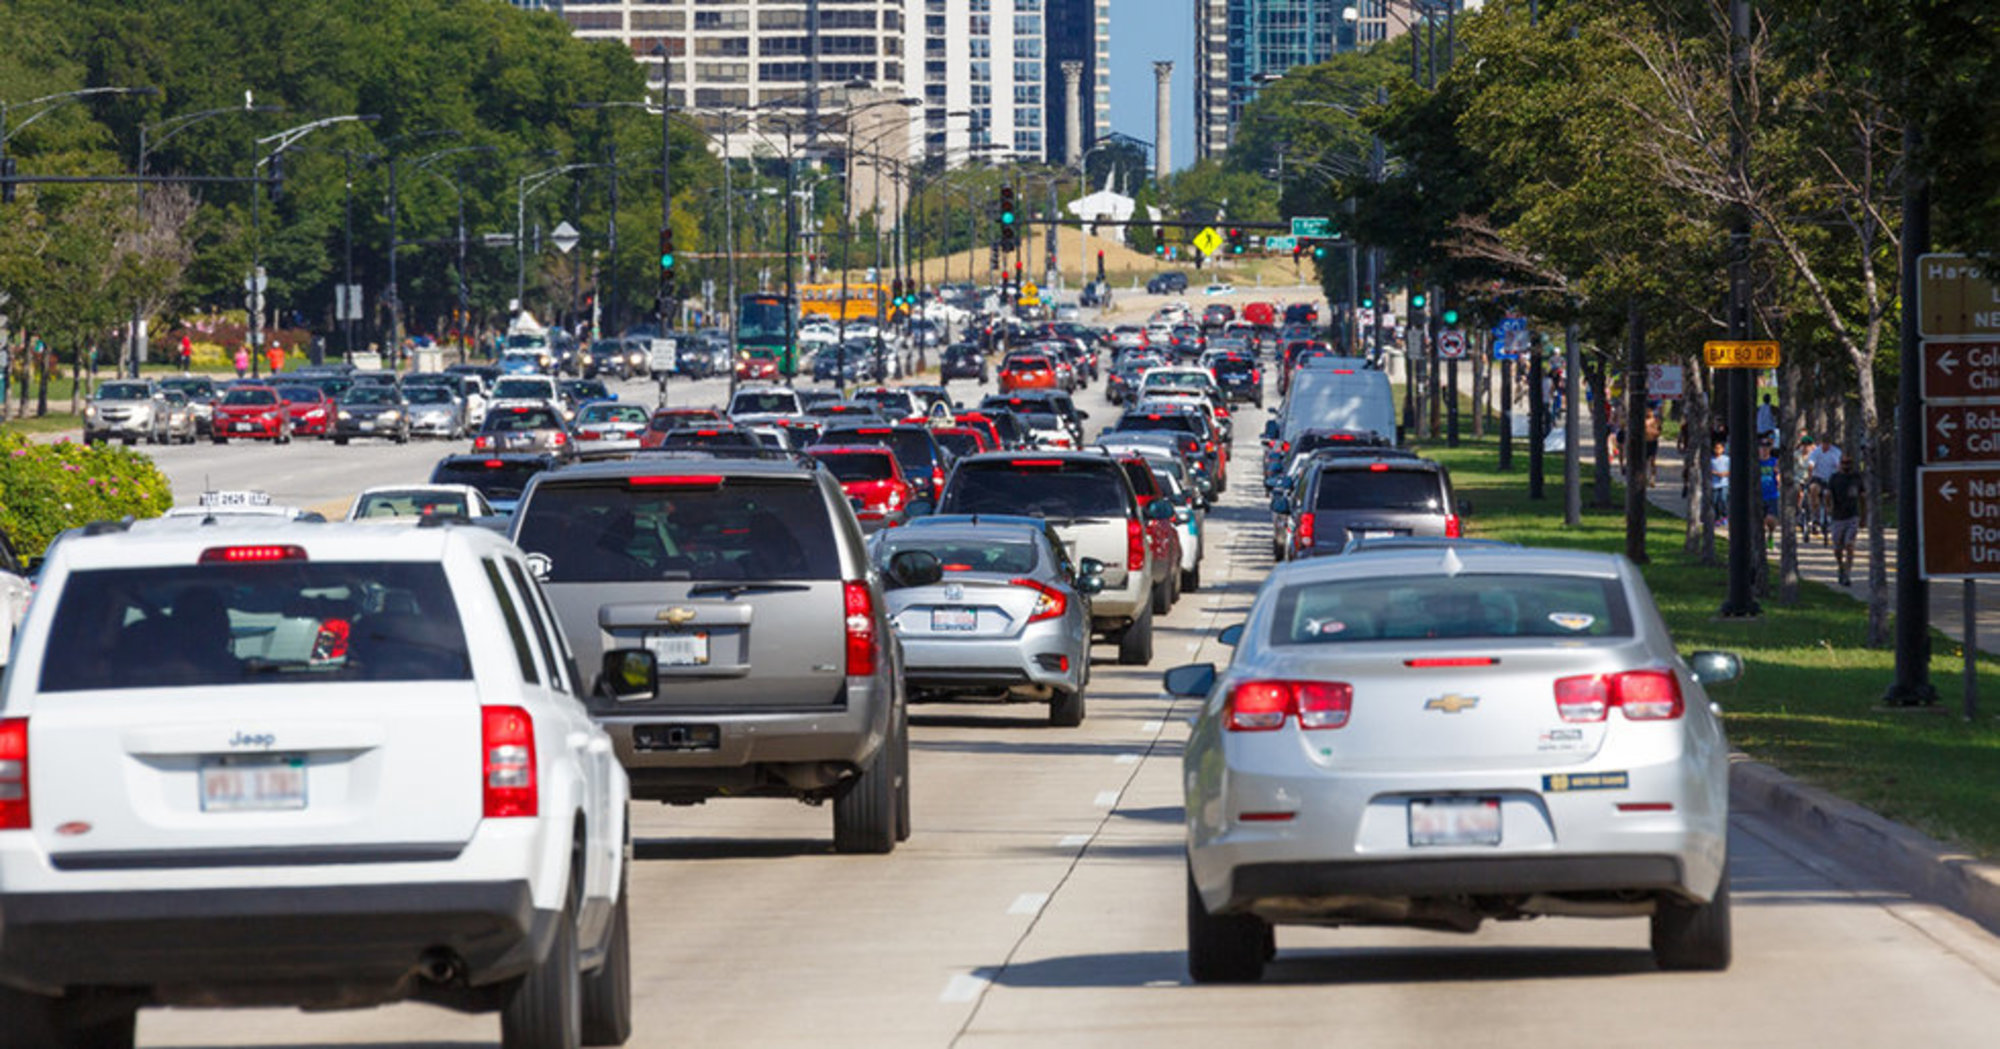 Harmful emissions from traffic, trucks, SUVs